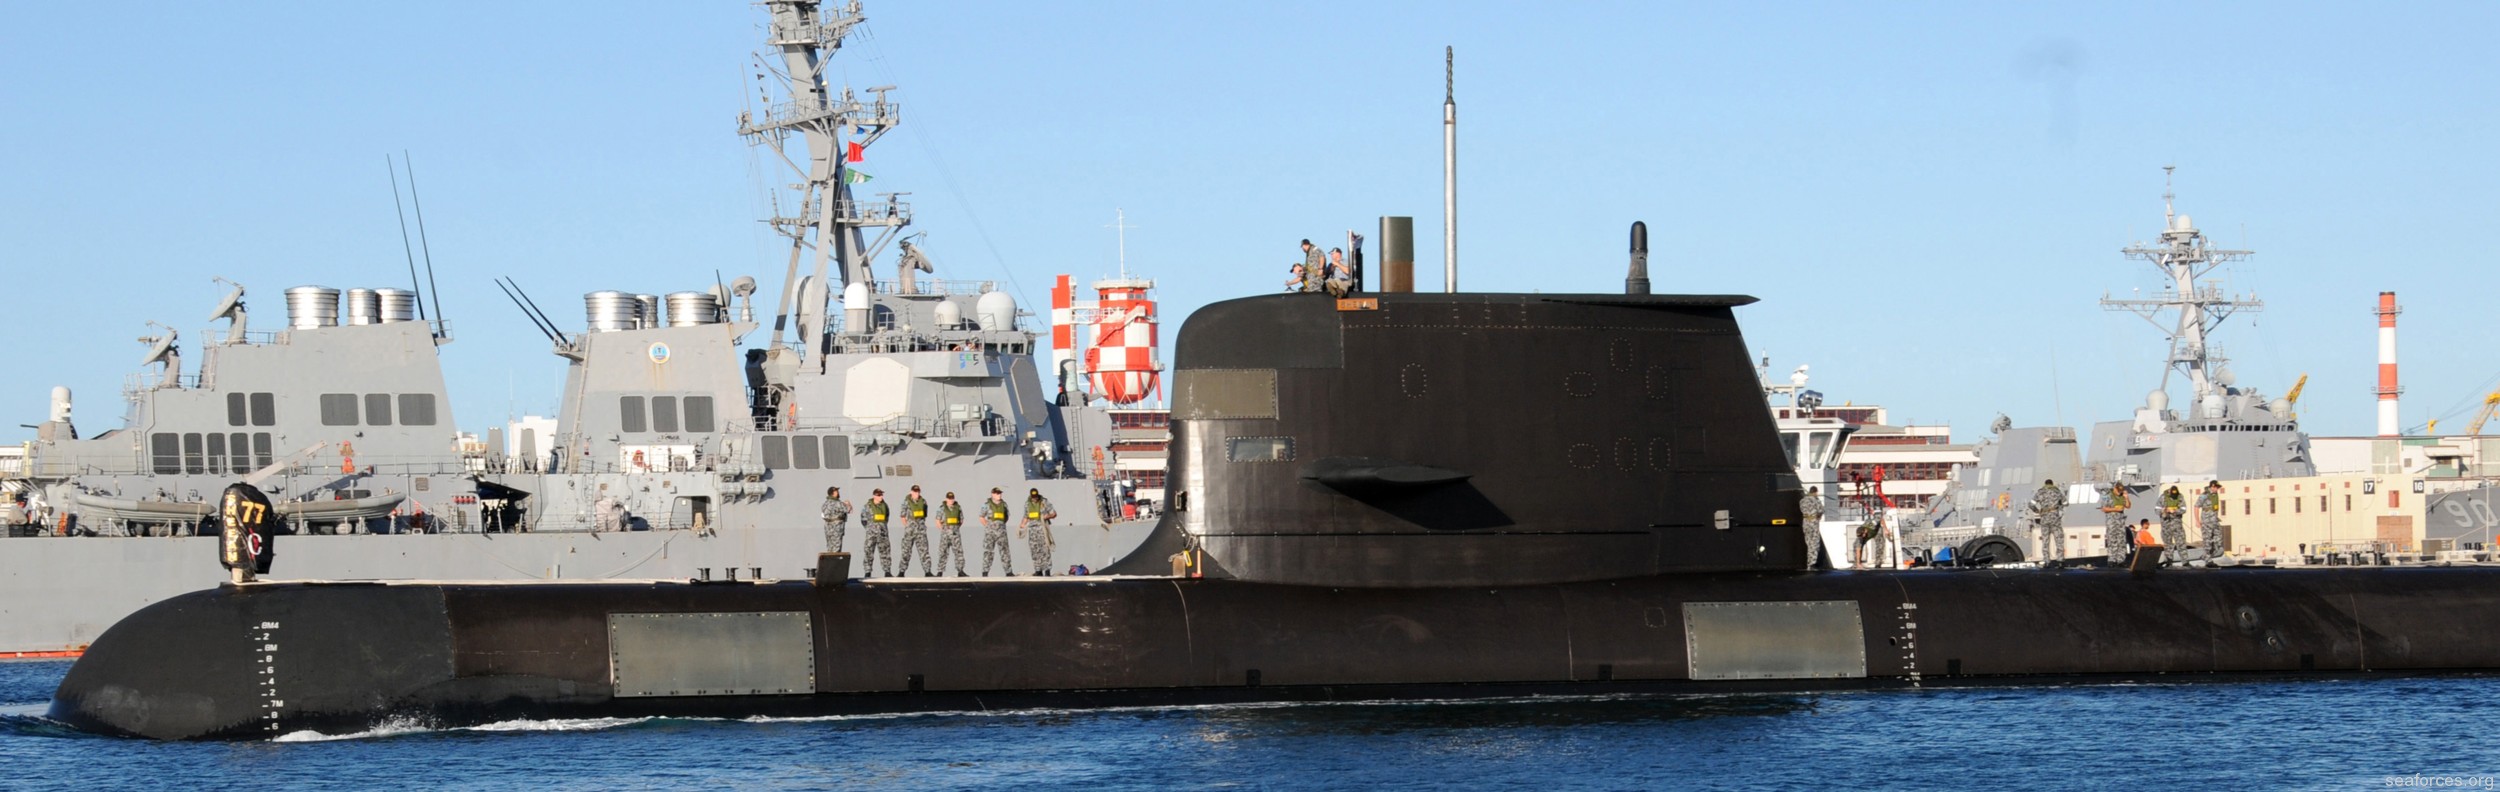 hmas sheean ssg-77 collins class attack submarine ssk royal australian navy 12